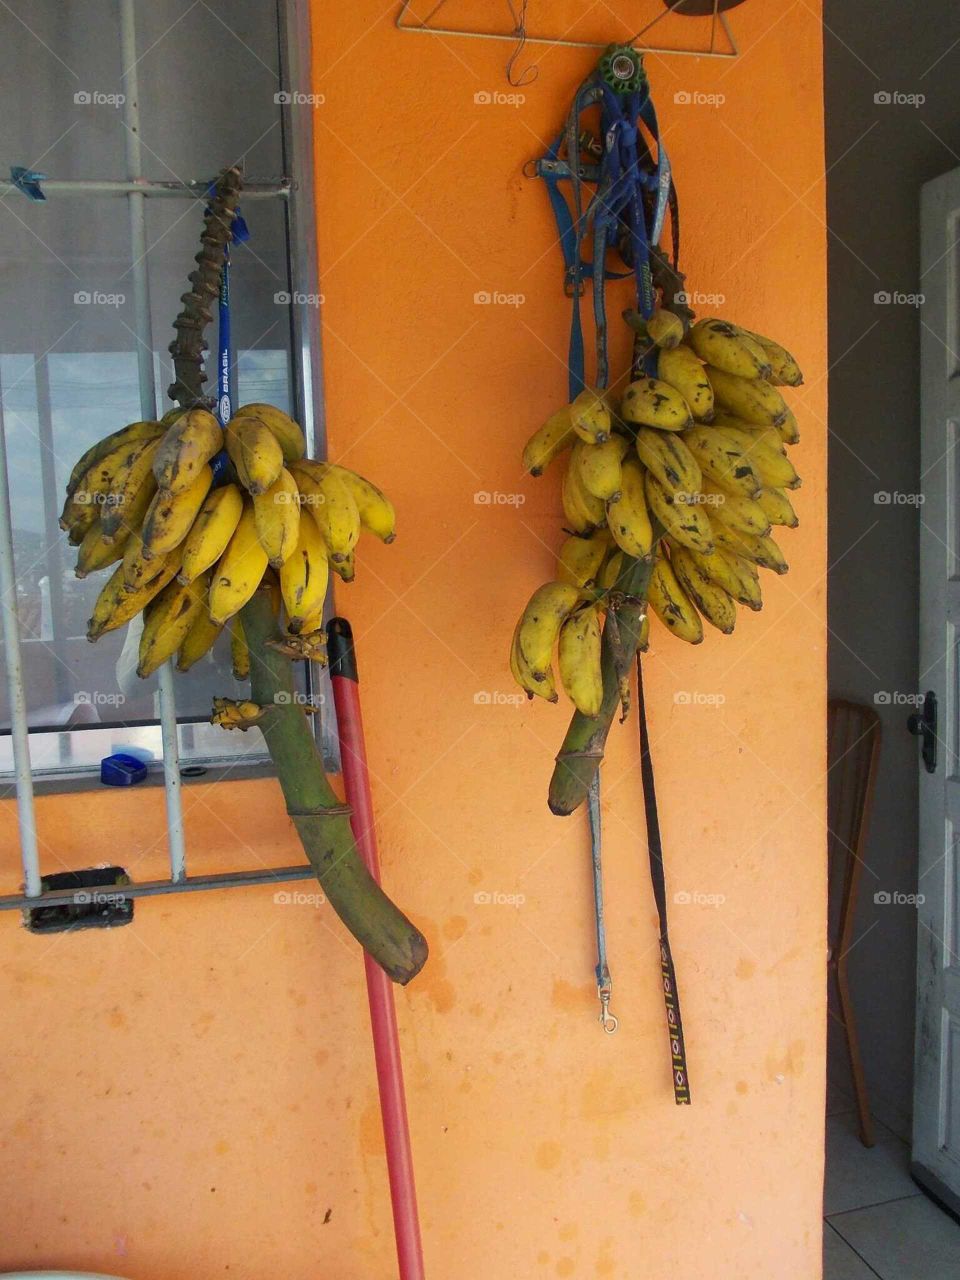 bananas and orange